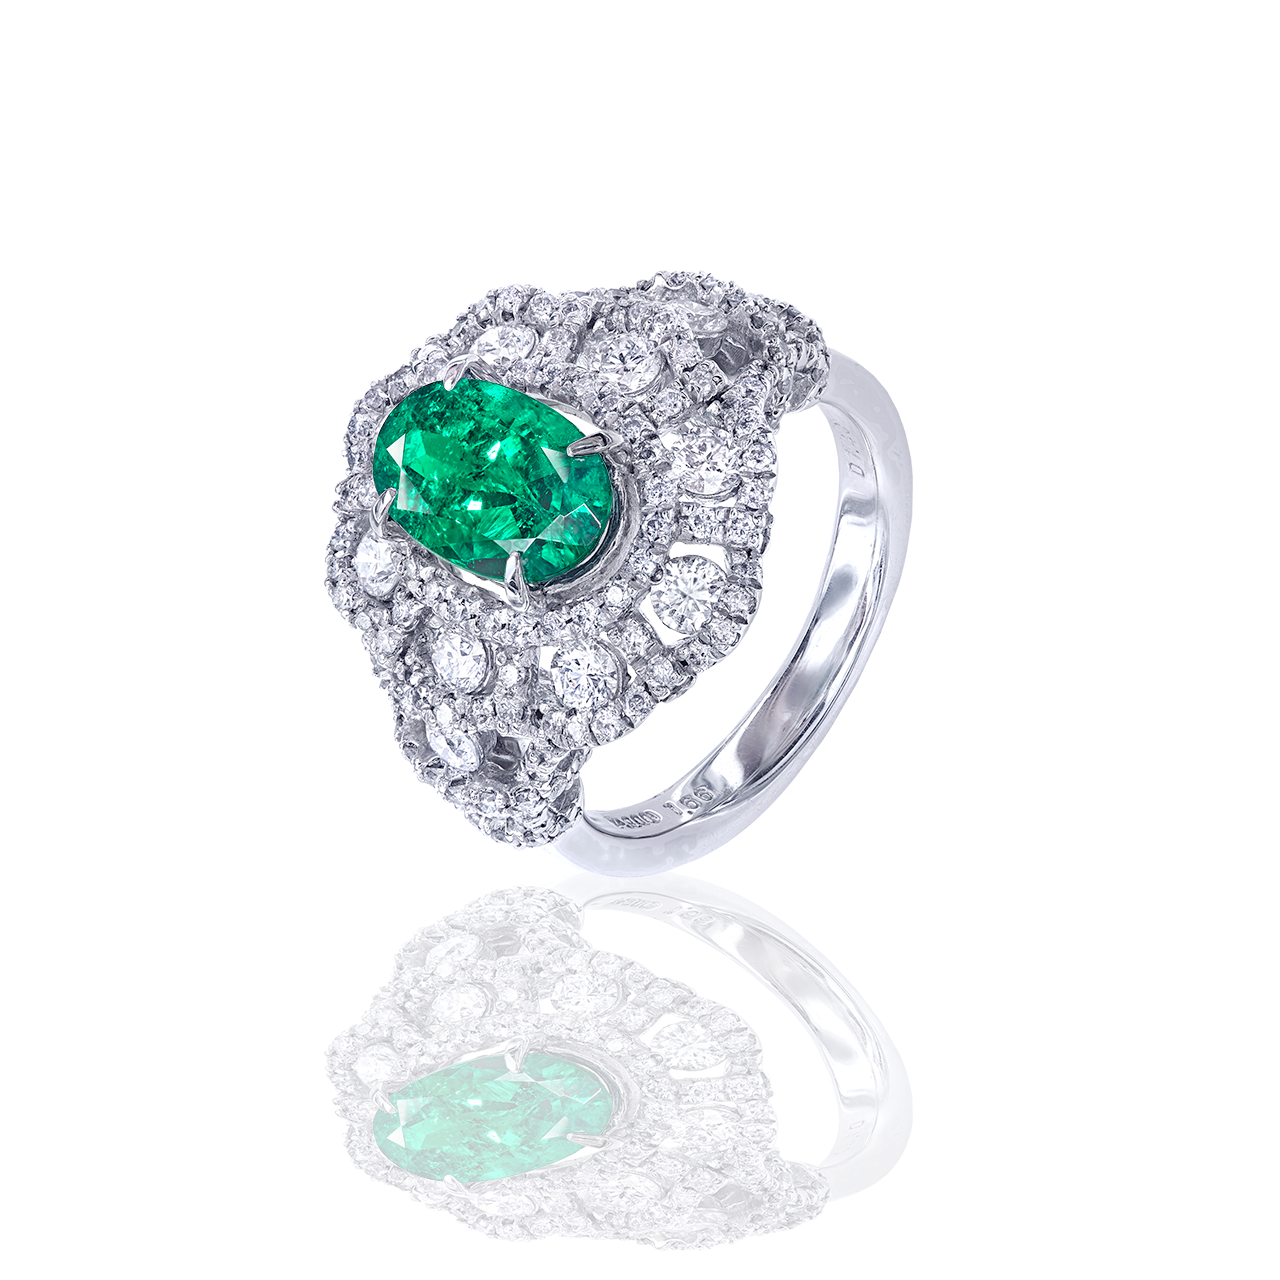 1.66 克拉 祖母綠戒
Emerald and Diamond Ring